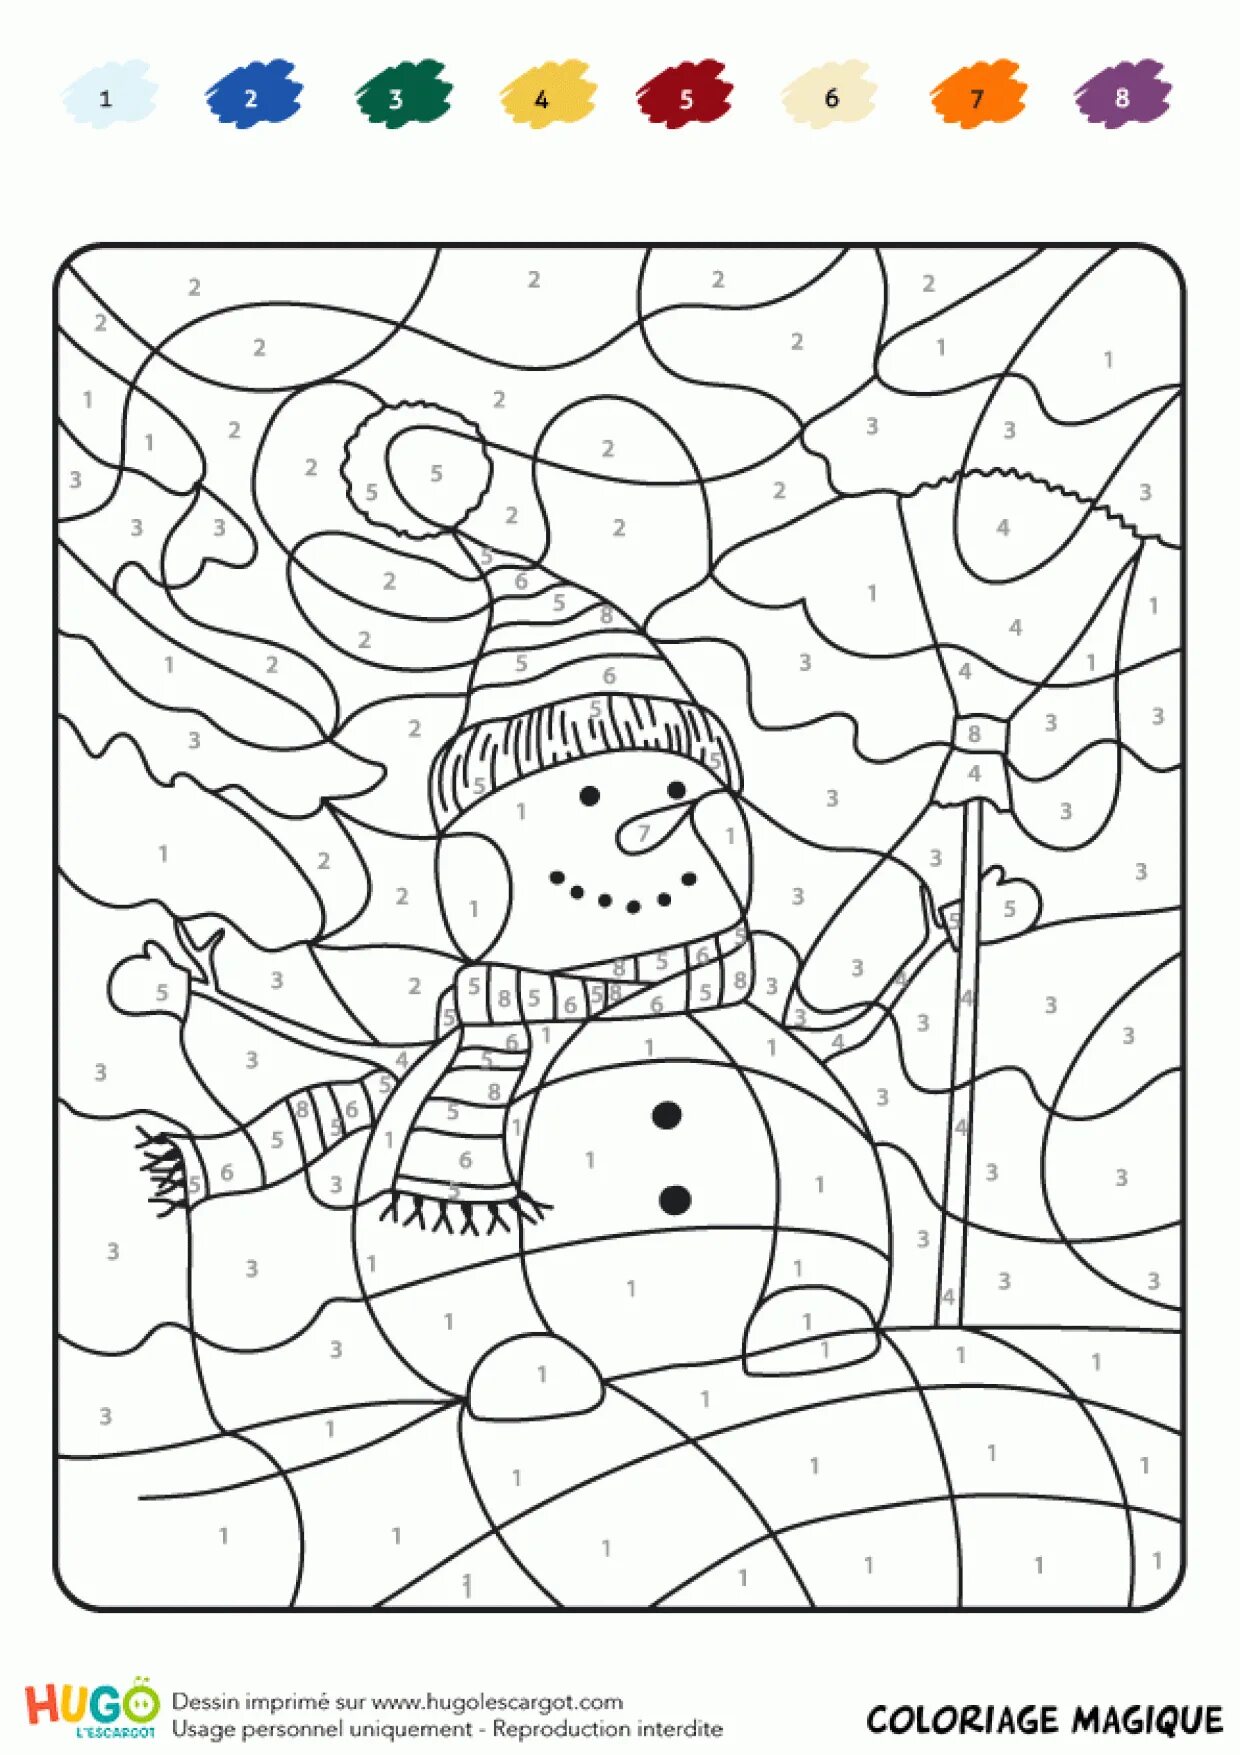 Snowman by color #8